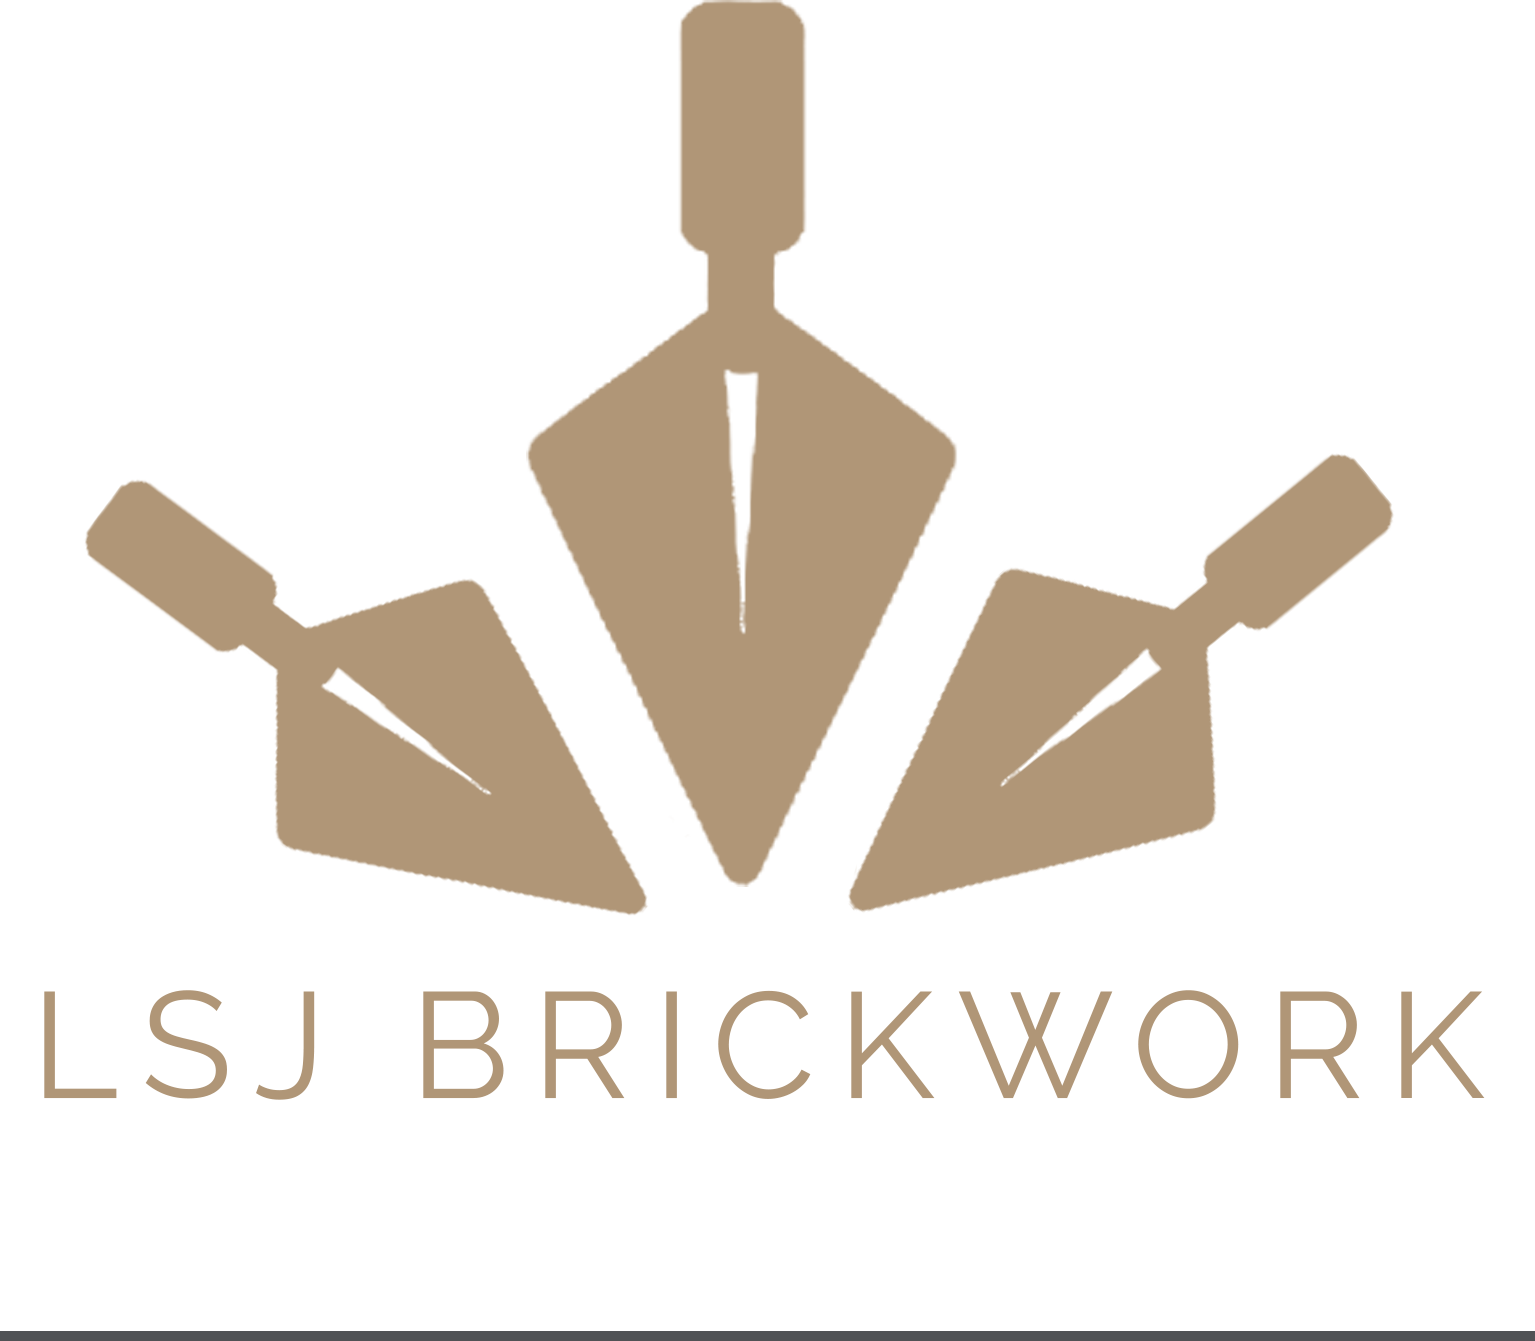 LSJ Brickwork + Stonemasonry